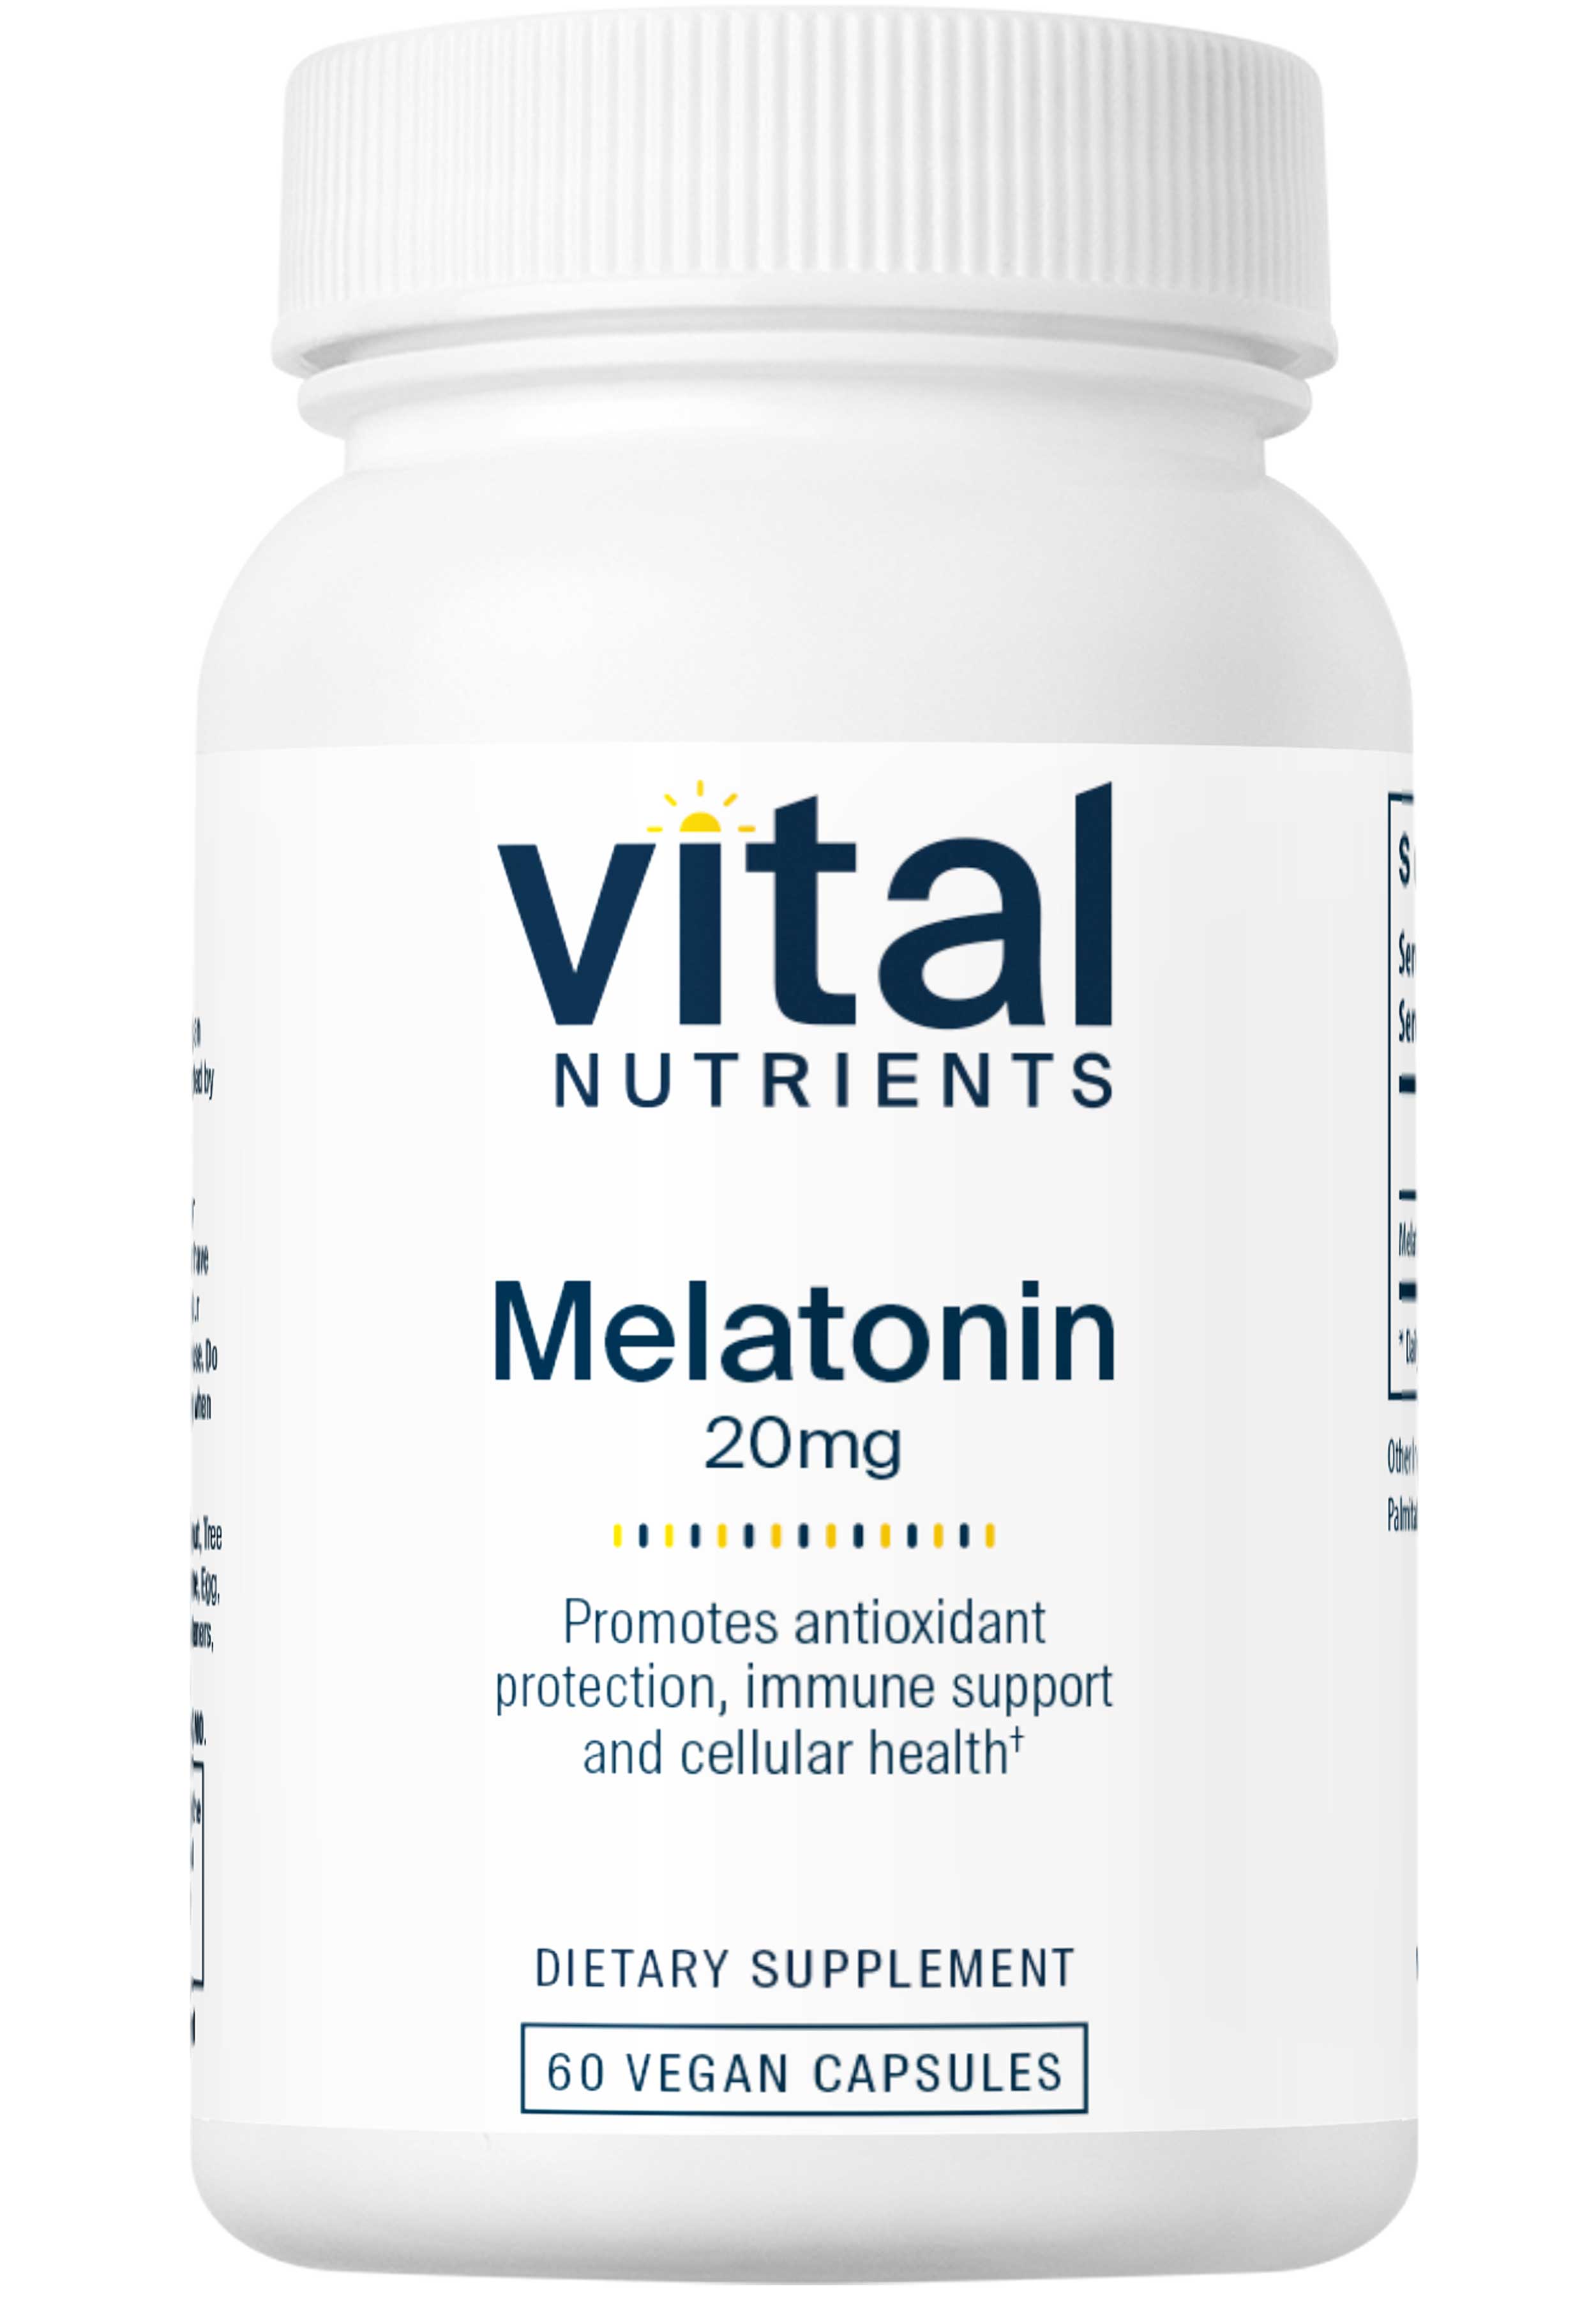 Vital Nutrients Melatonin 20mg